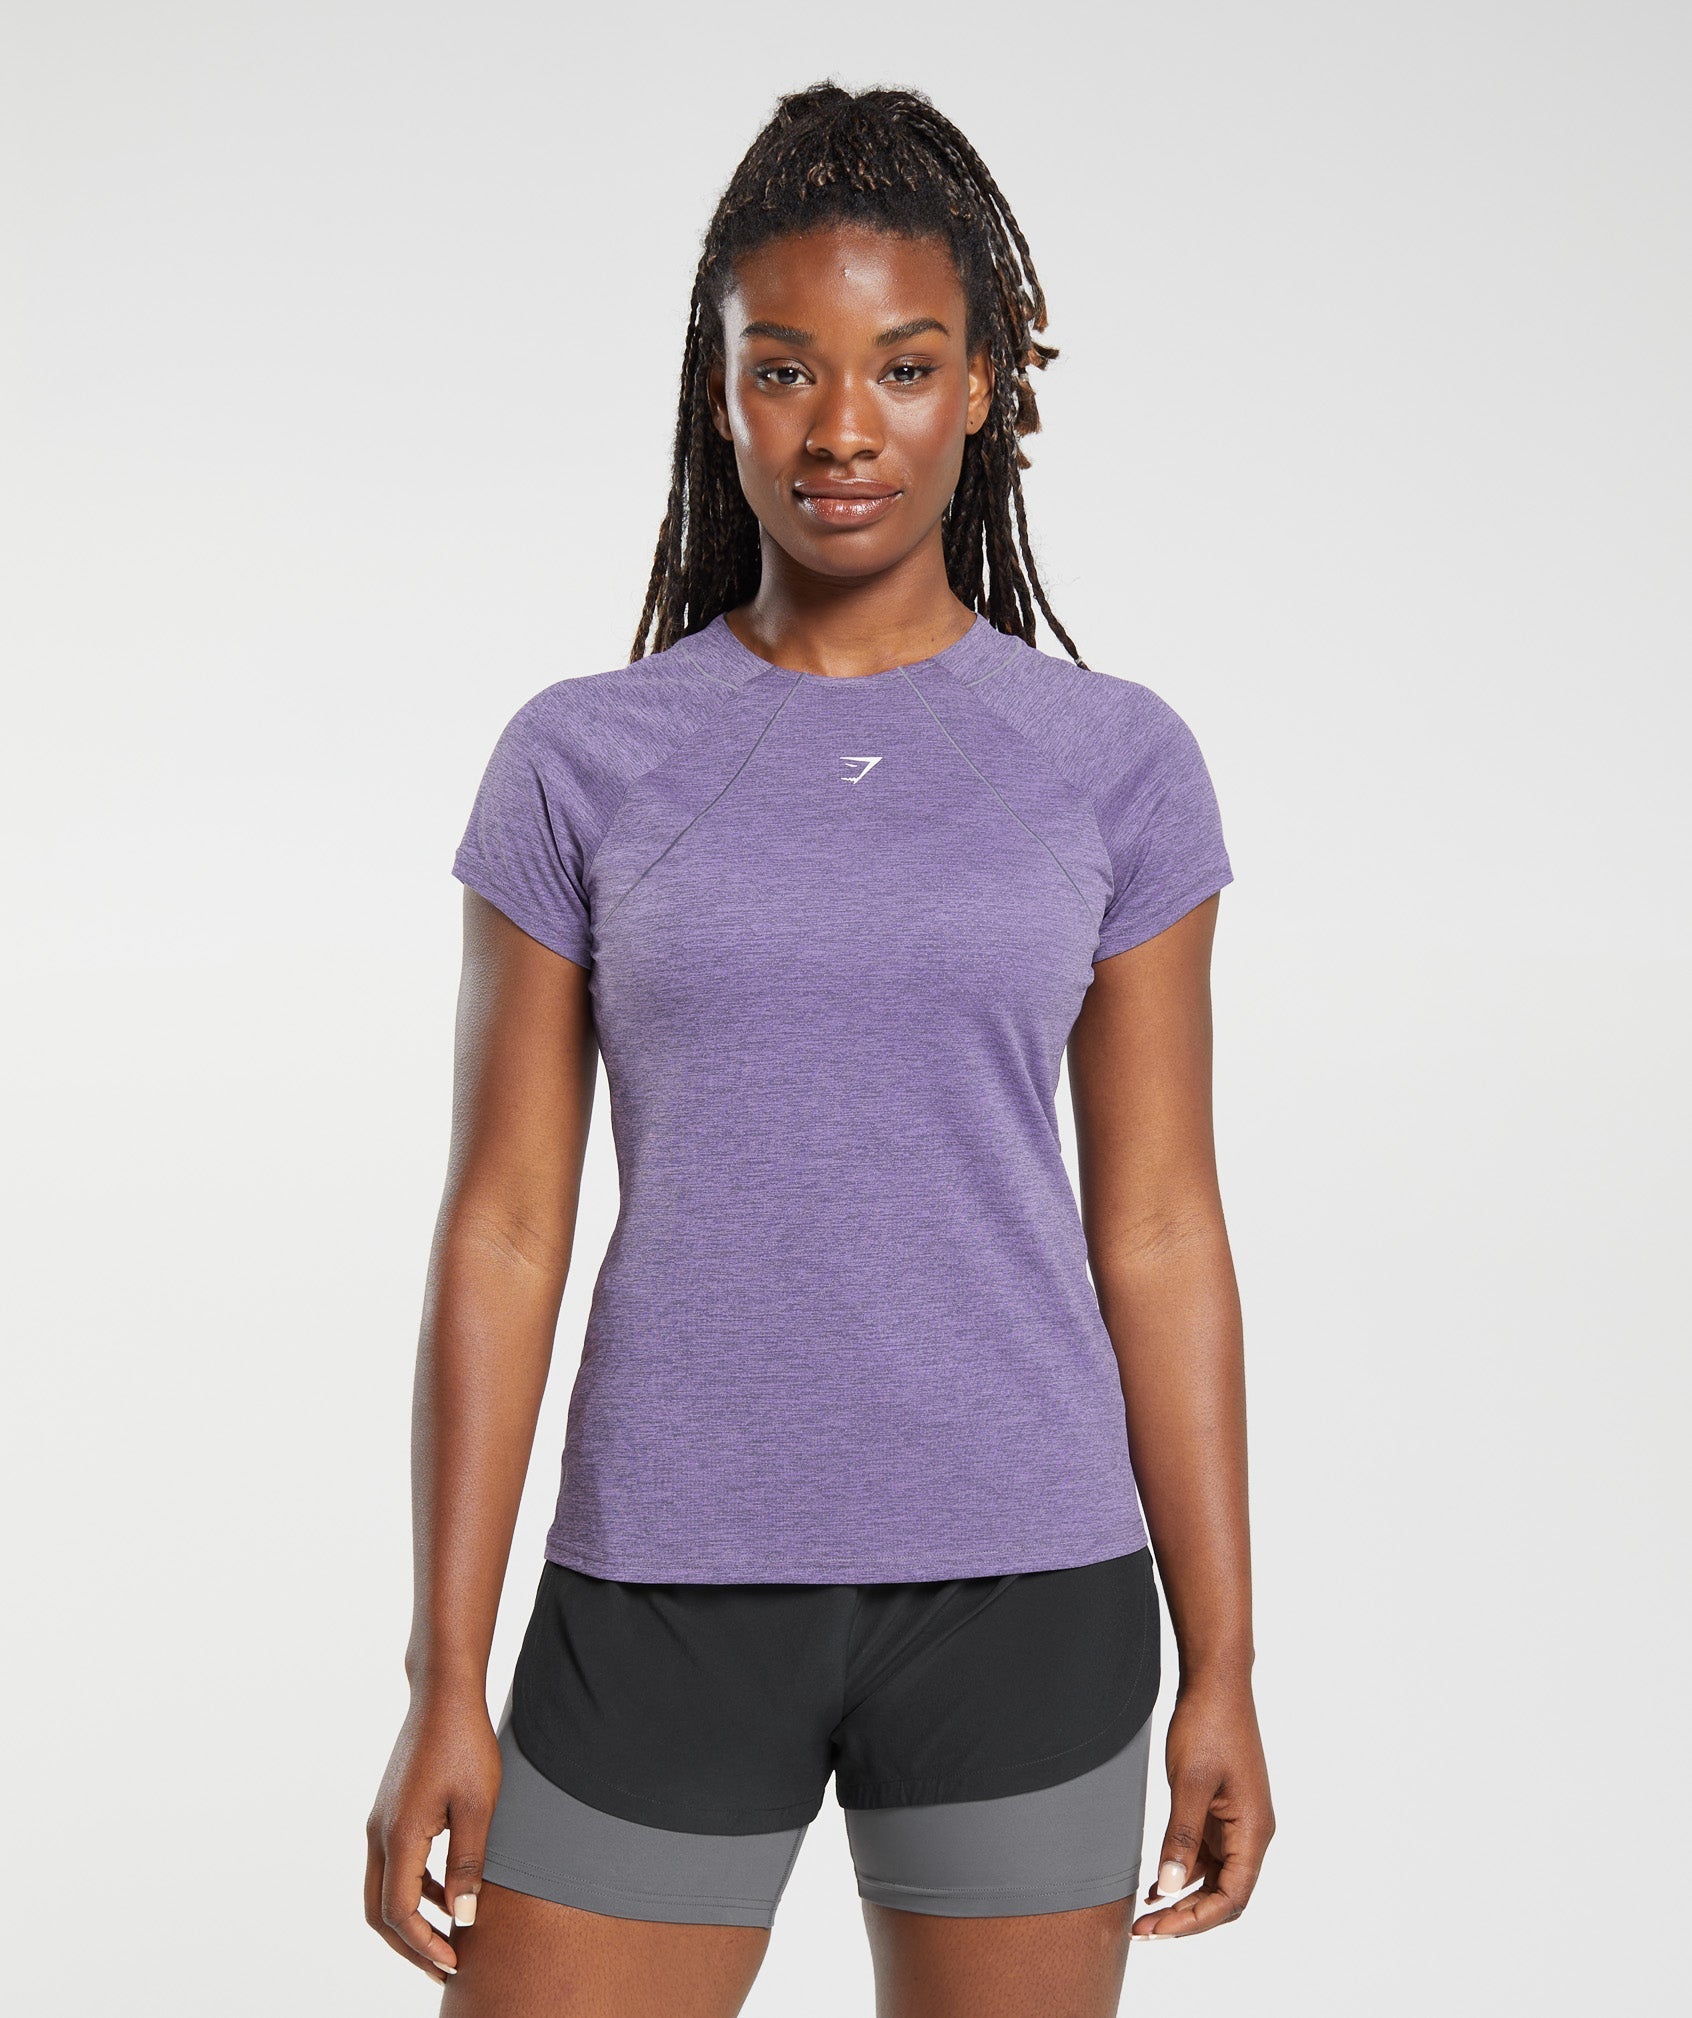 Playera Gymshark Training T Shirt Mujer 100% Original